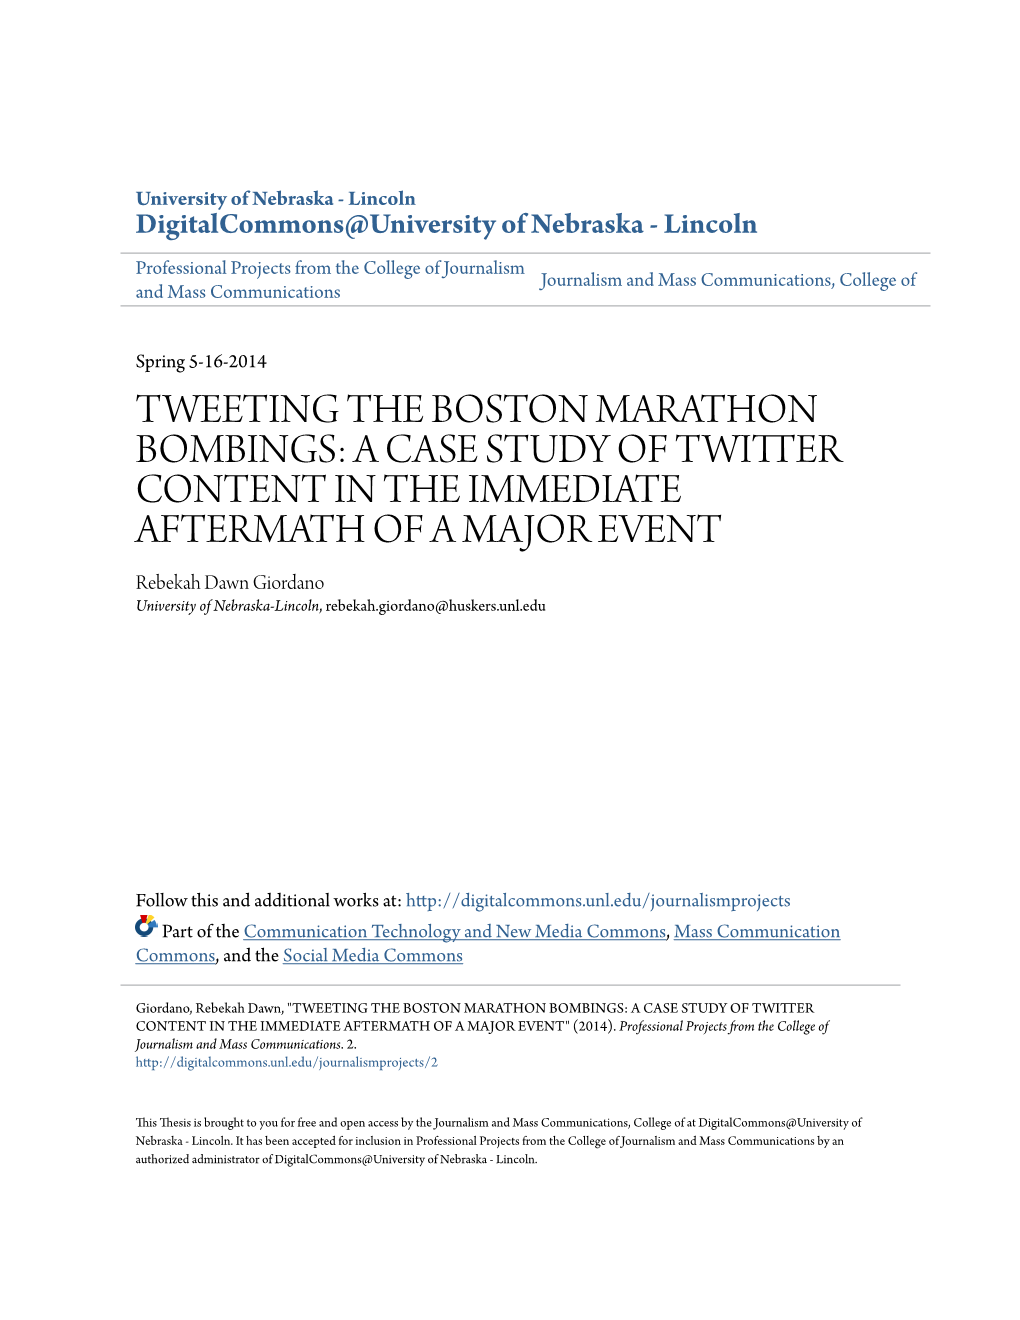 Tweeting the Boston Marathon Bombings: a Case